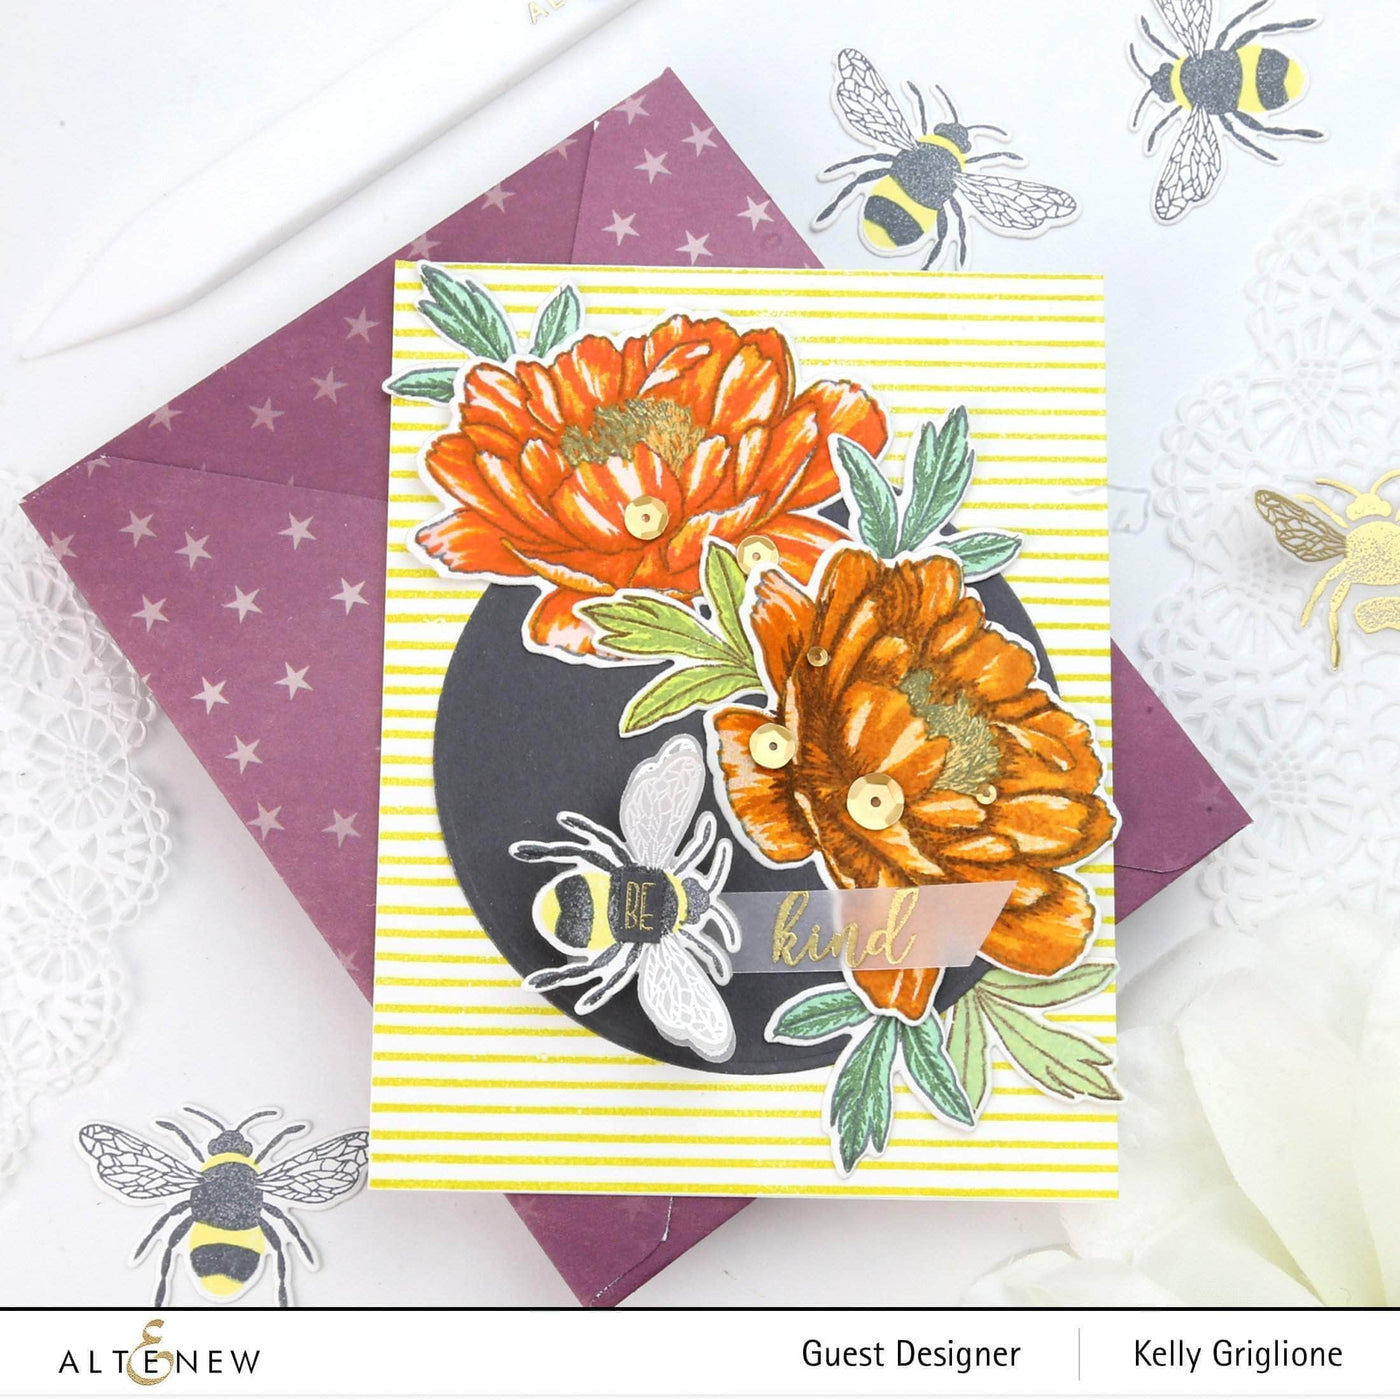 Mini Delight Mini Delight: Bee Kind Stamp & Die Set